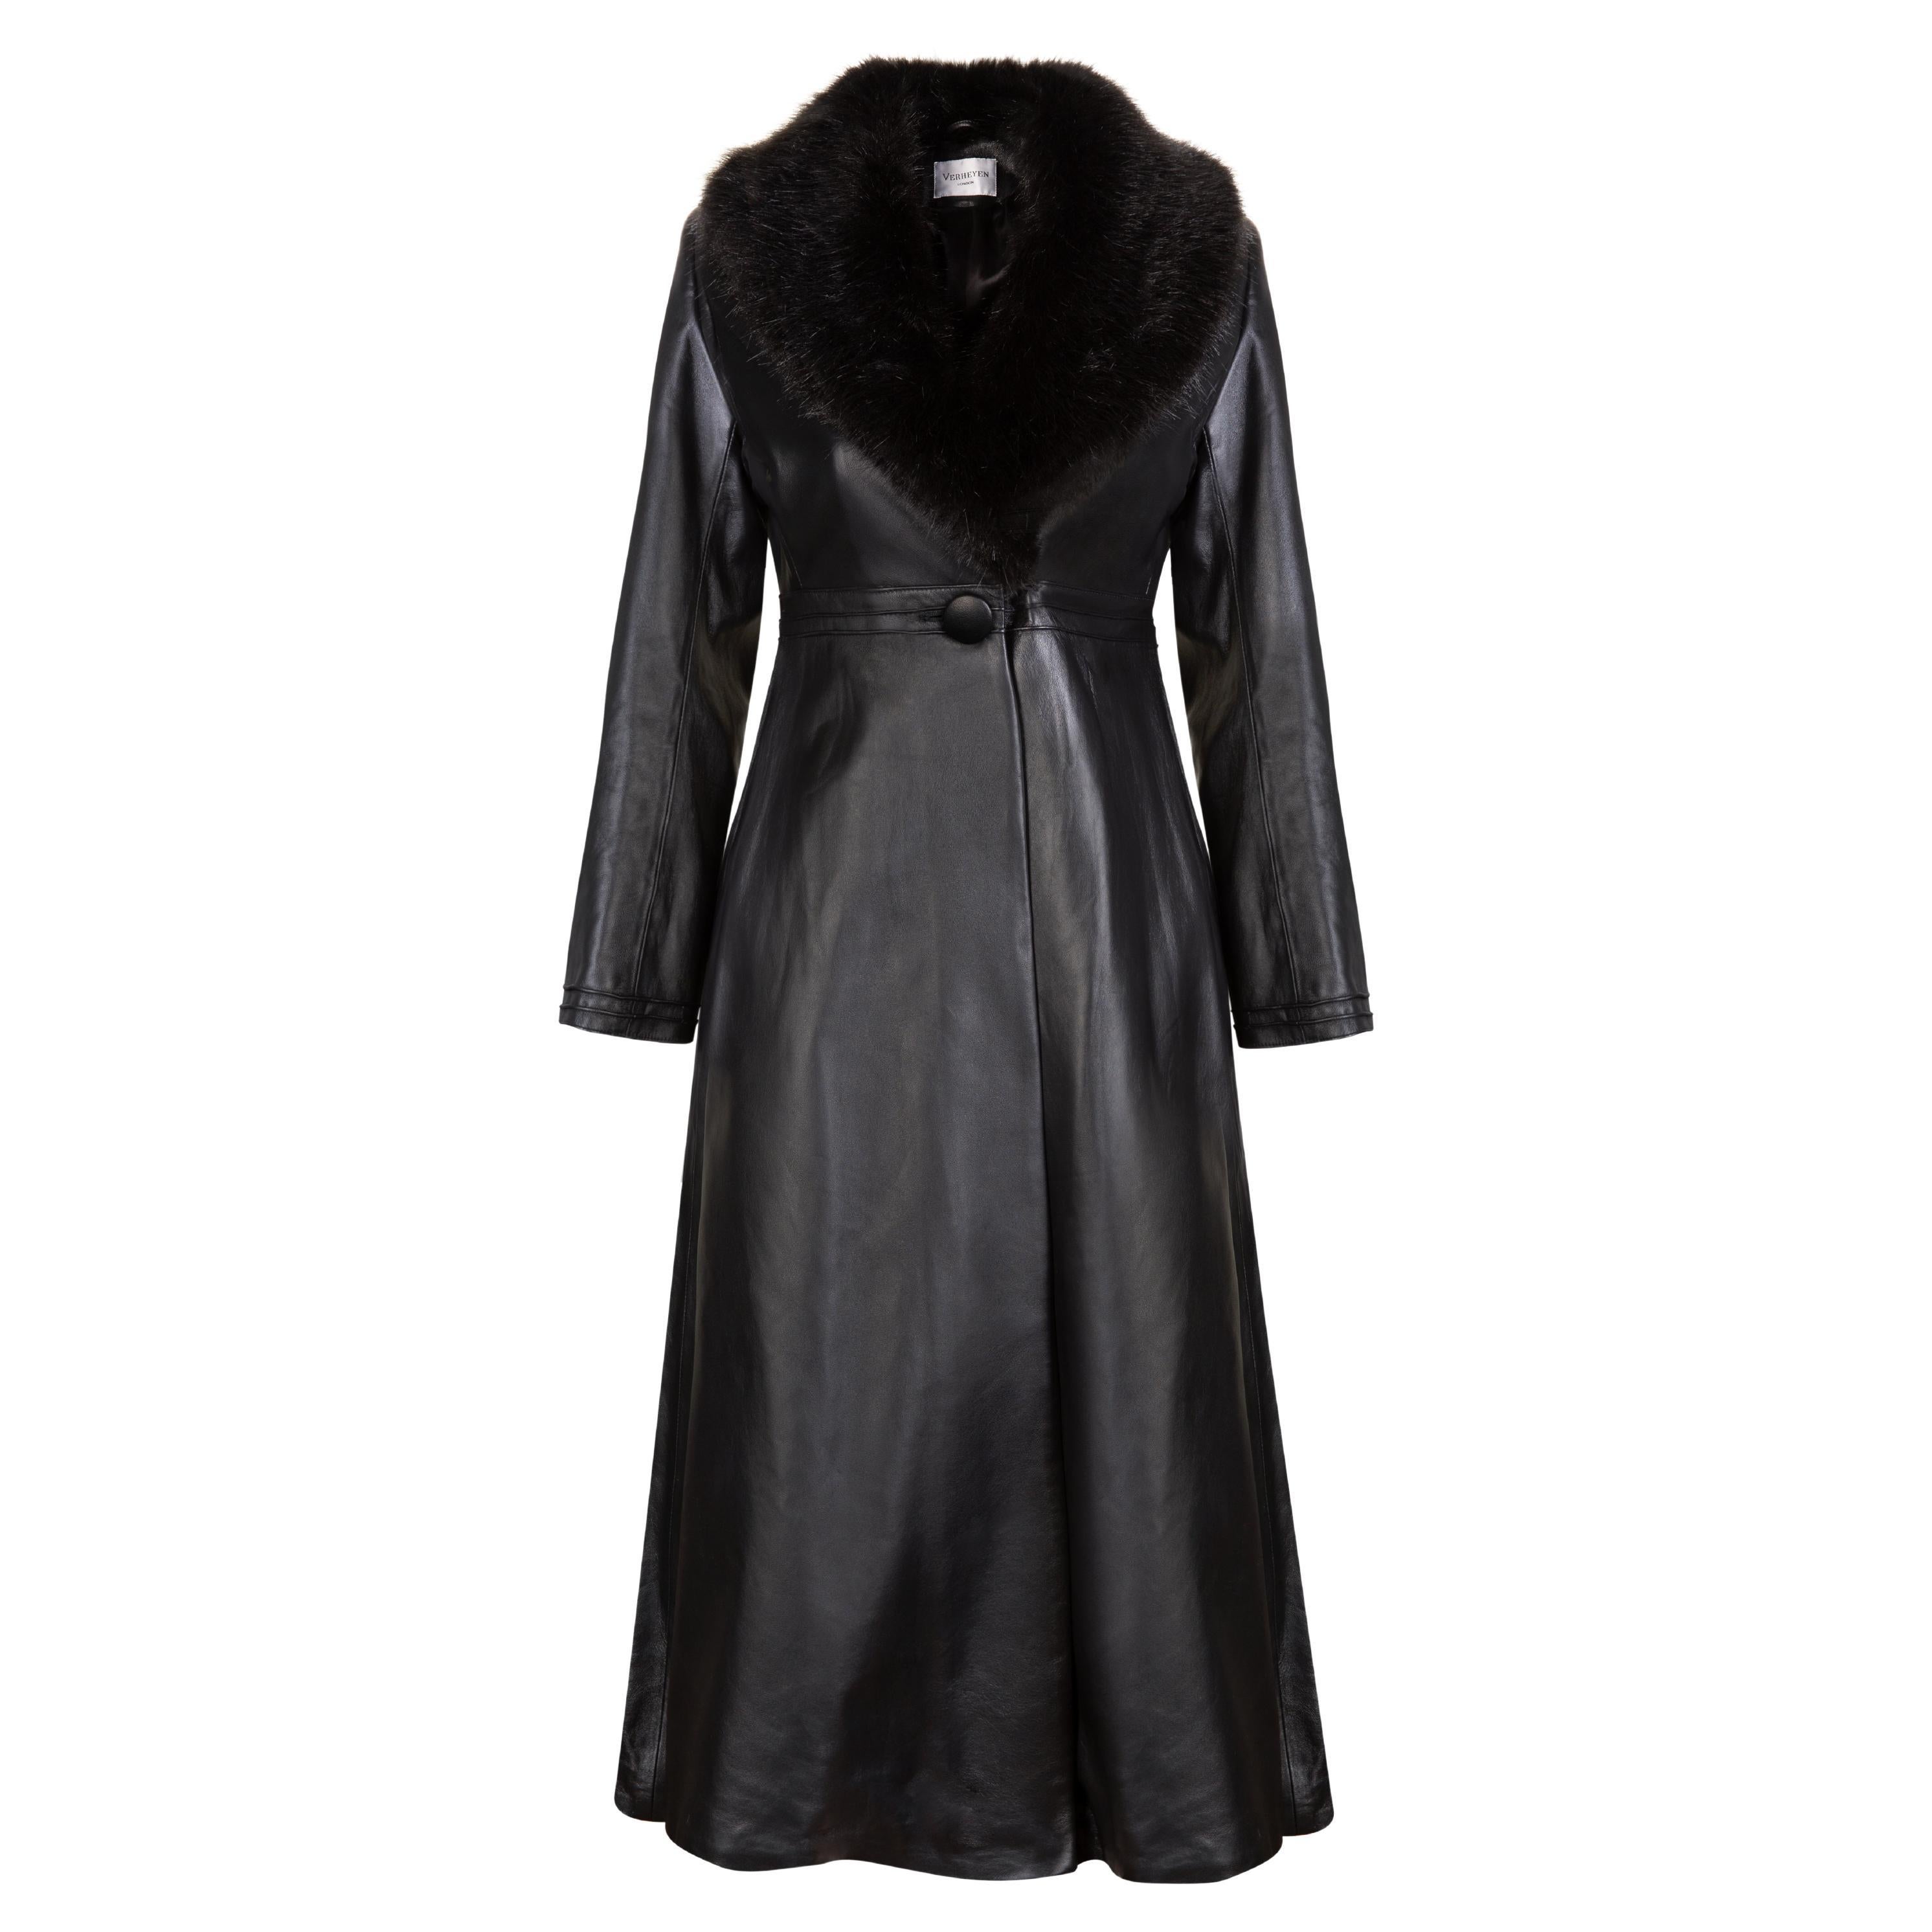 Verheyen London Edward Leather Coat with Faux Fur Collar in Black - Size uk 12 For Sale